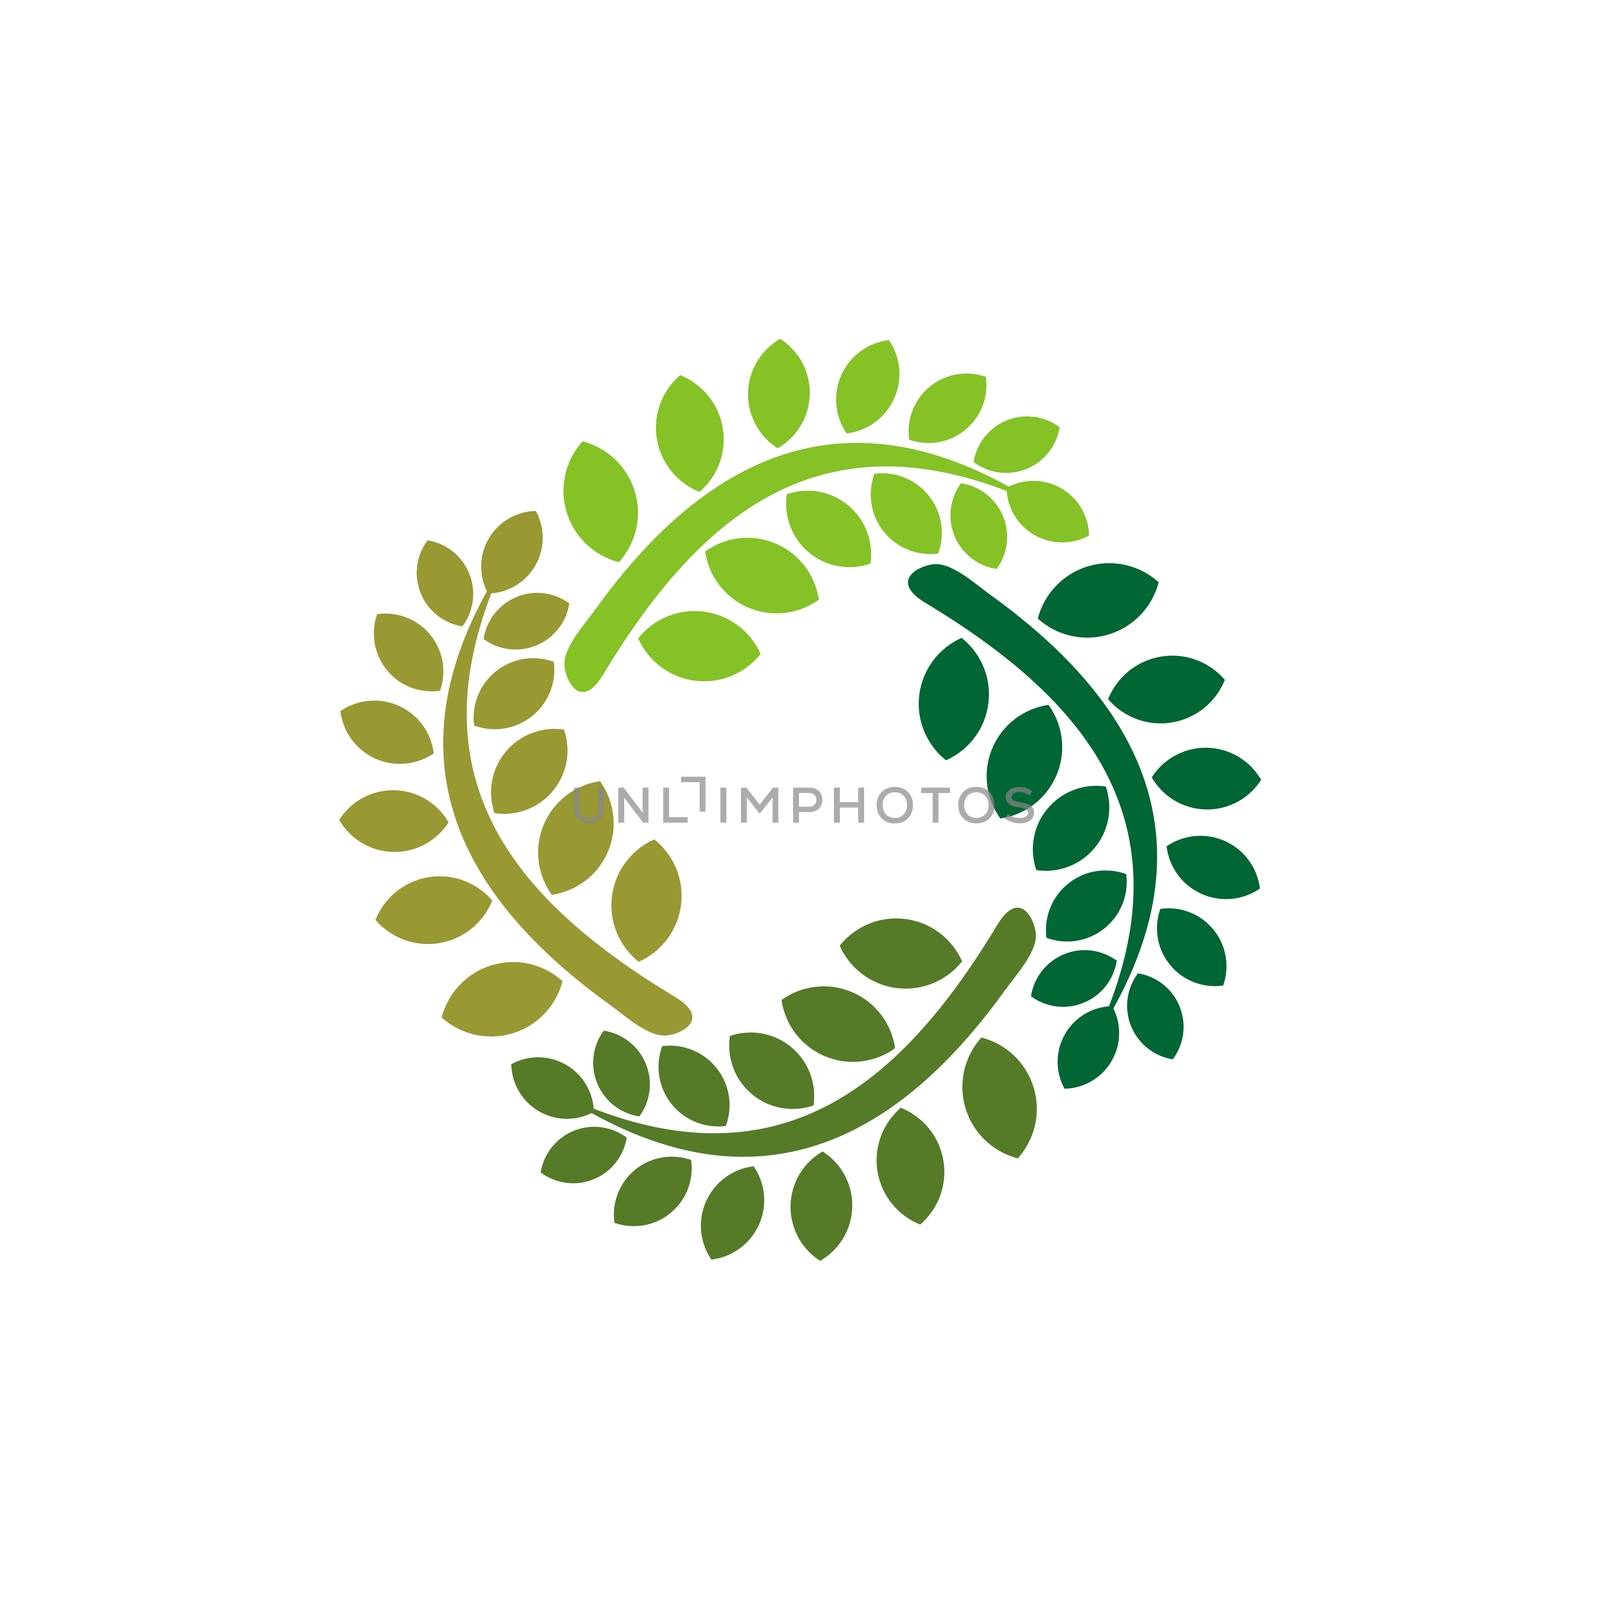 Green Leaves Circle Ornamental Logo Template illustration design EPS 10 by soponyono1